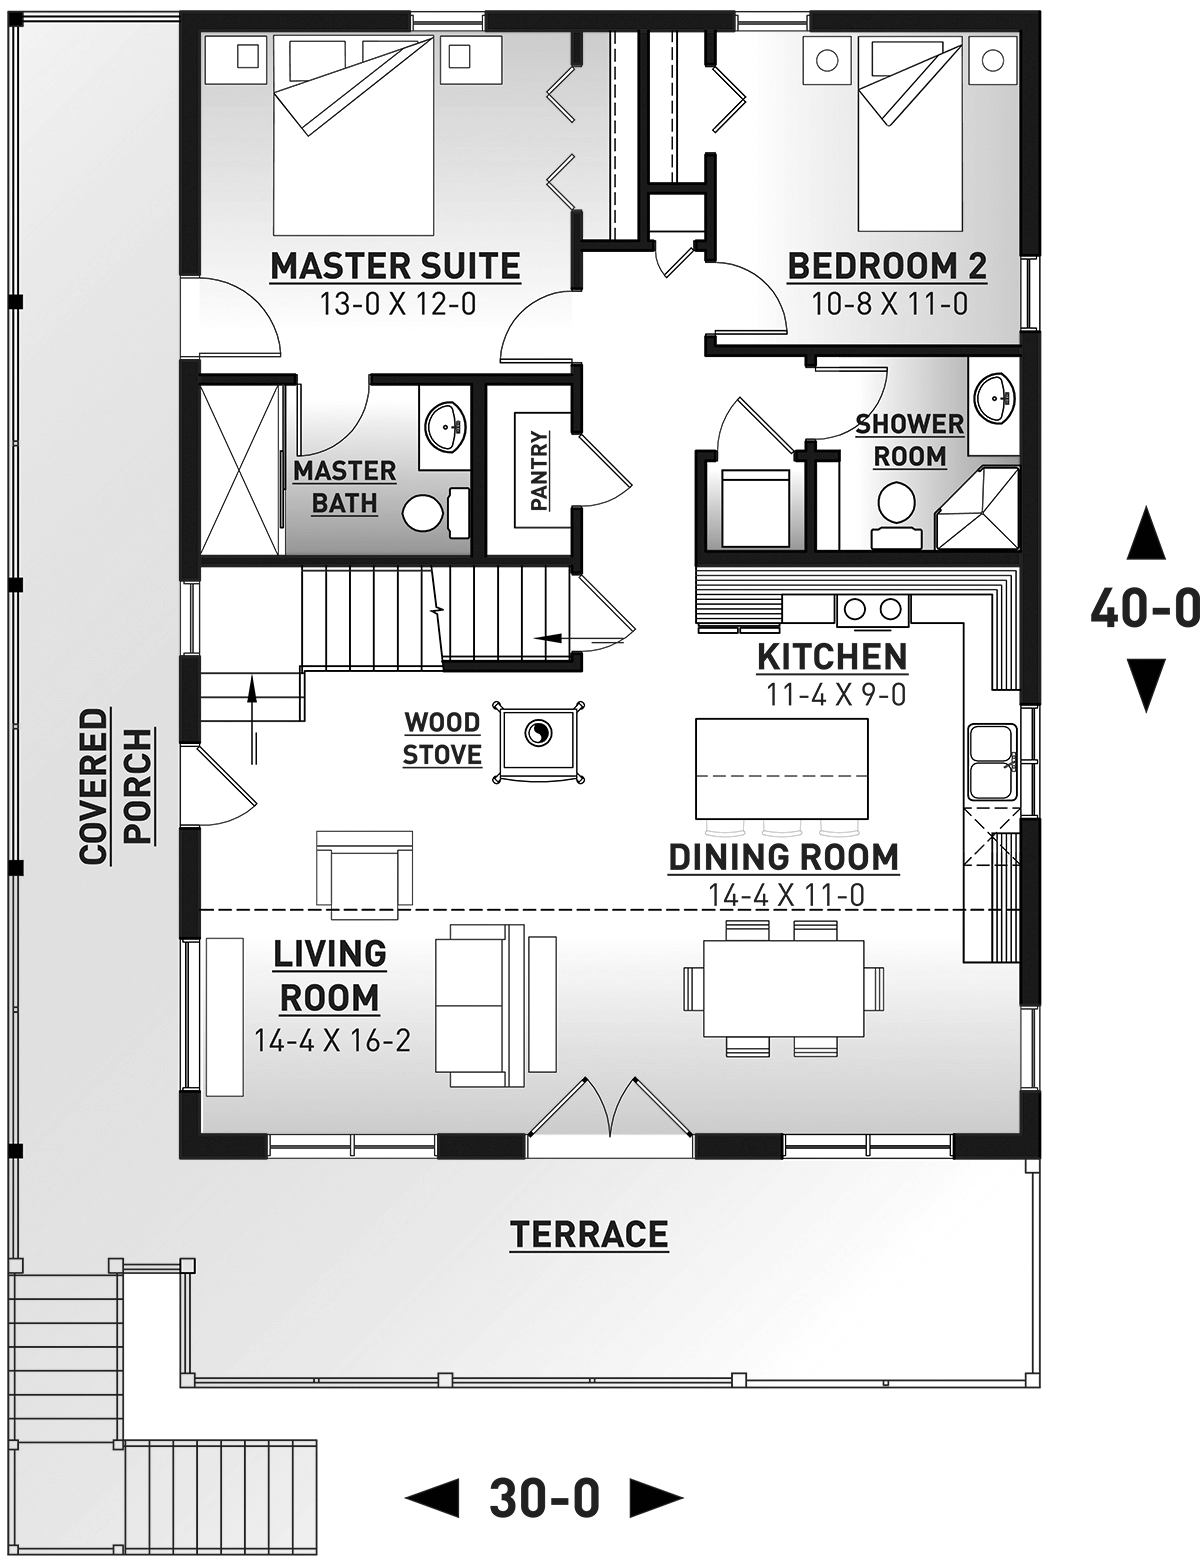 4 bedroom, 3 bath, 1,900-2,400 sq. ft. house plans